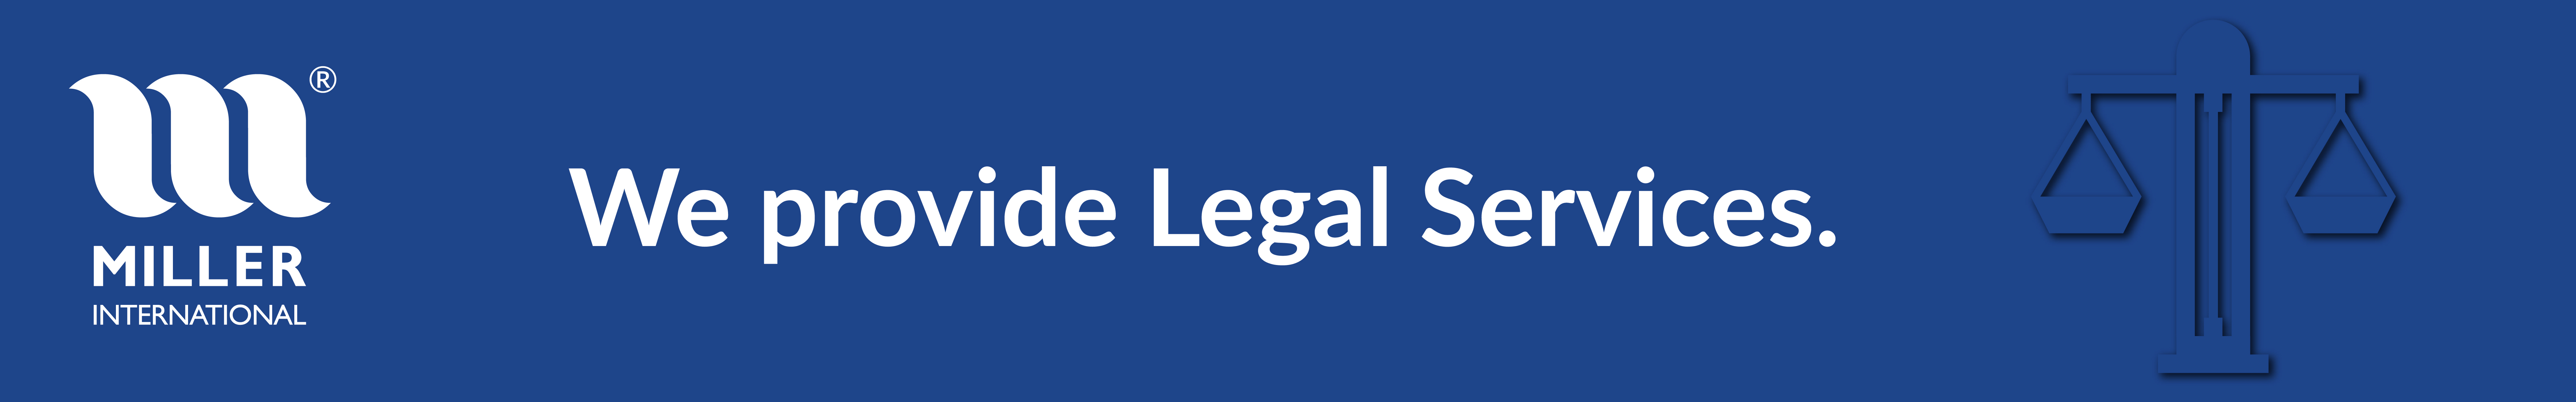 Legal Services - Miller International